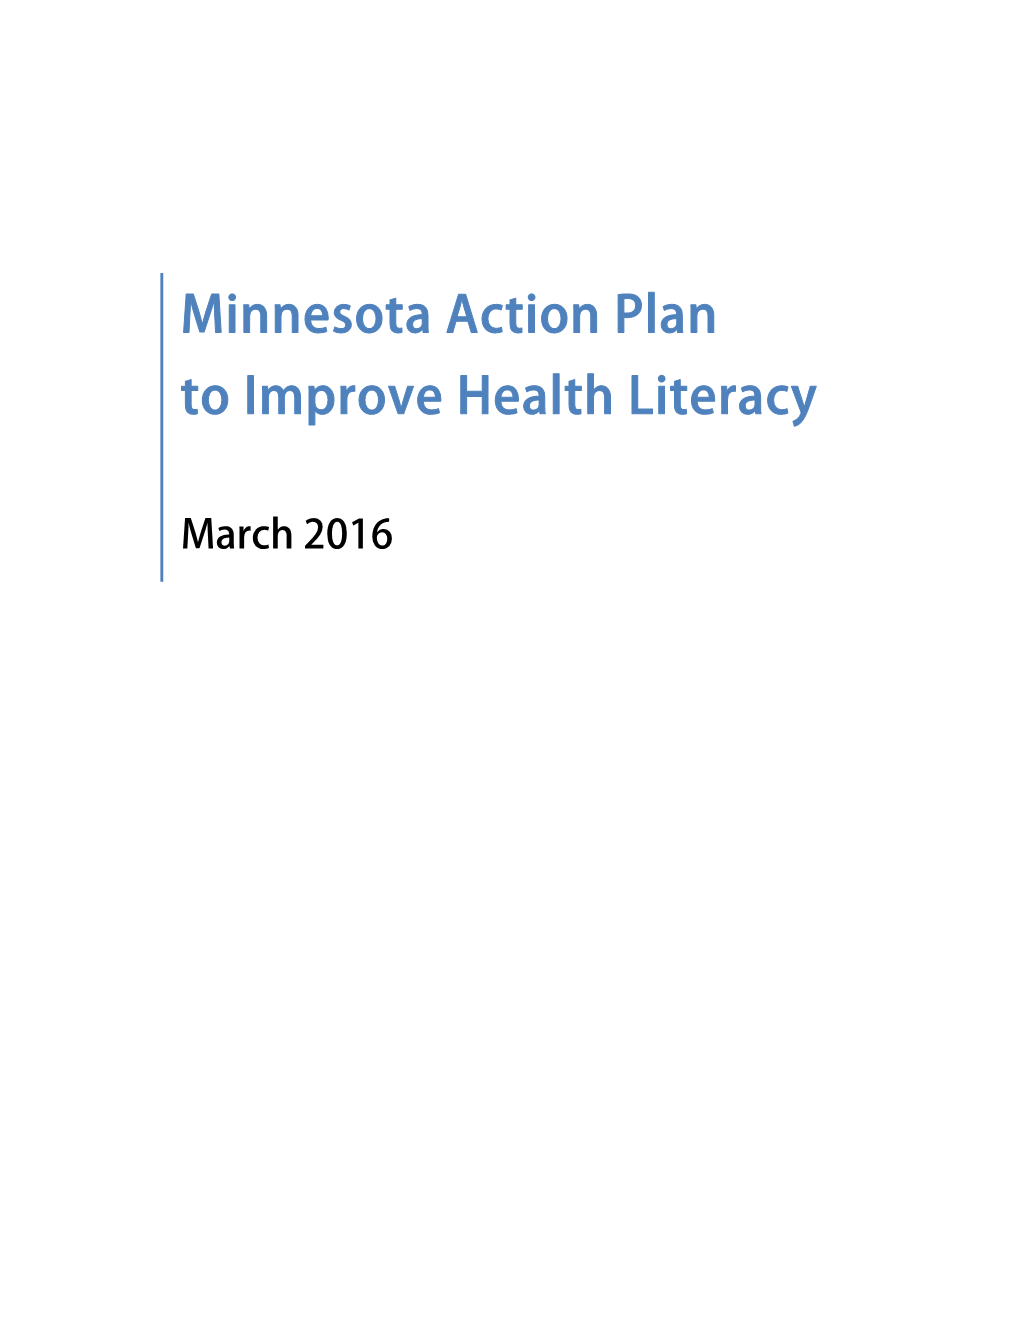 Minnesota Action Plan to Improve Health Literacy